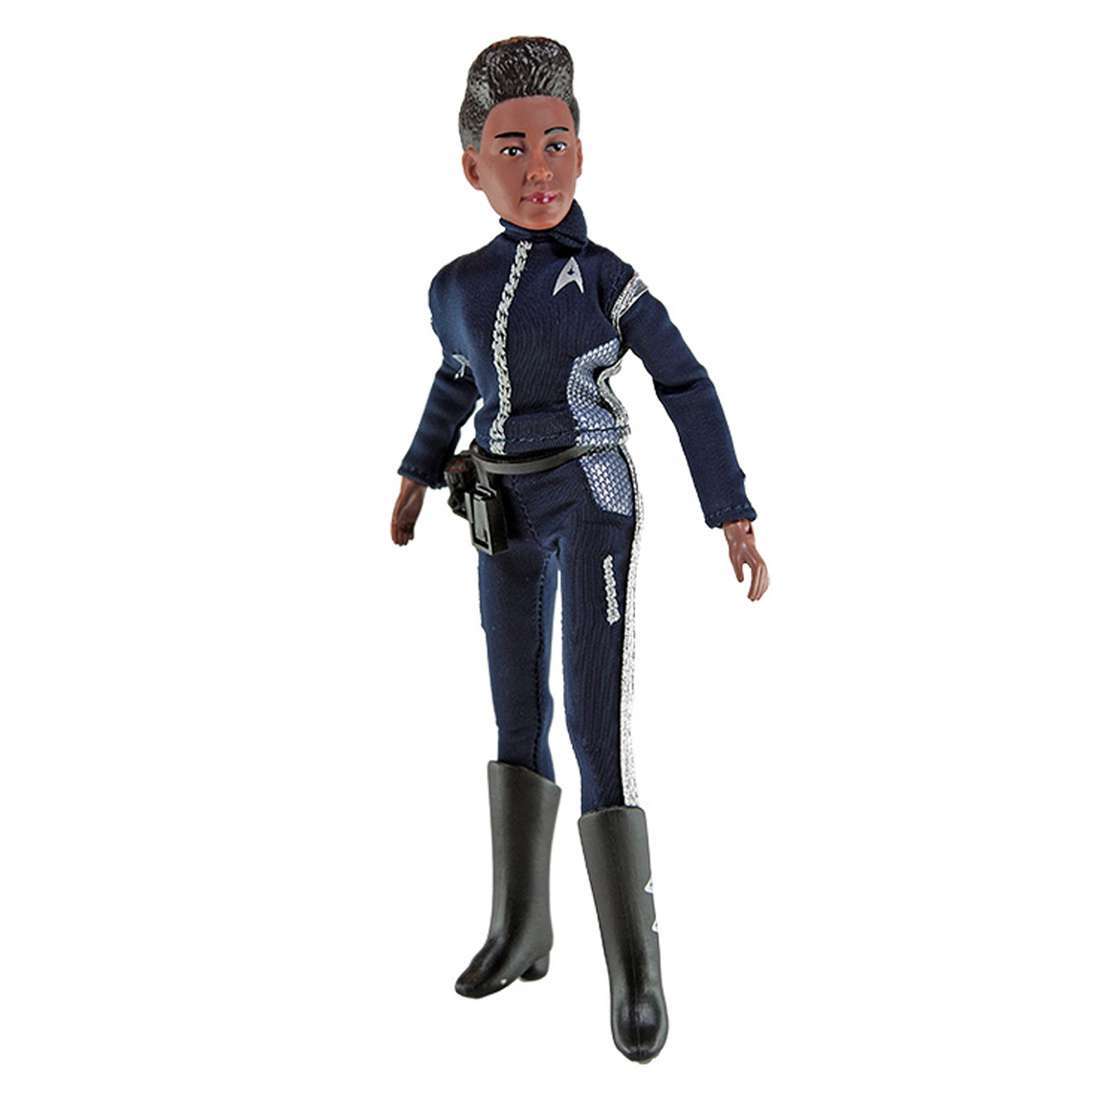 Mego Sci Fi Action Figure Star Trek - Michael Burnham